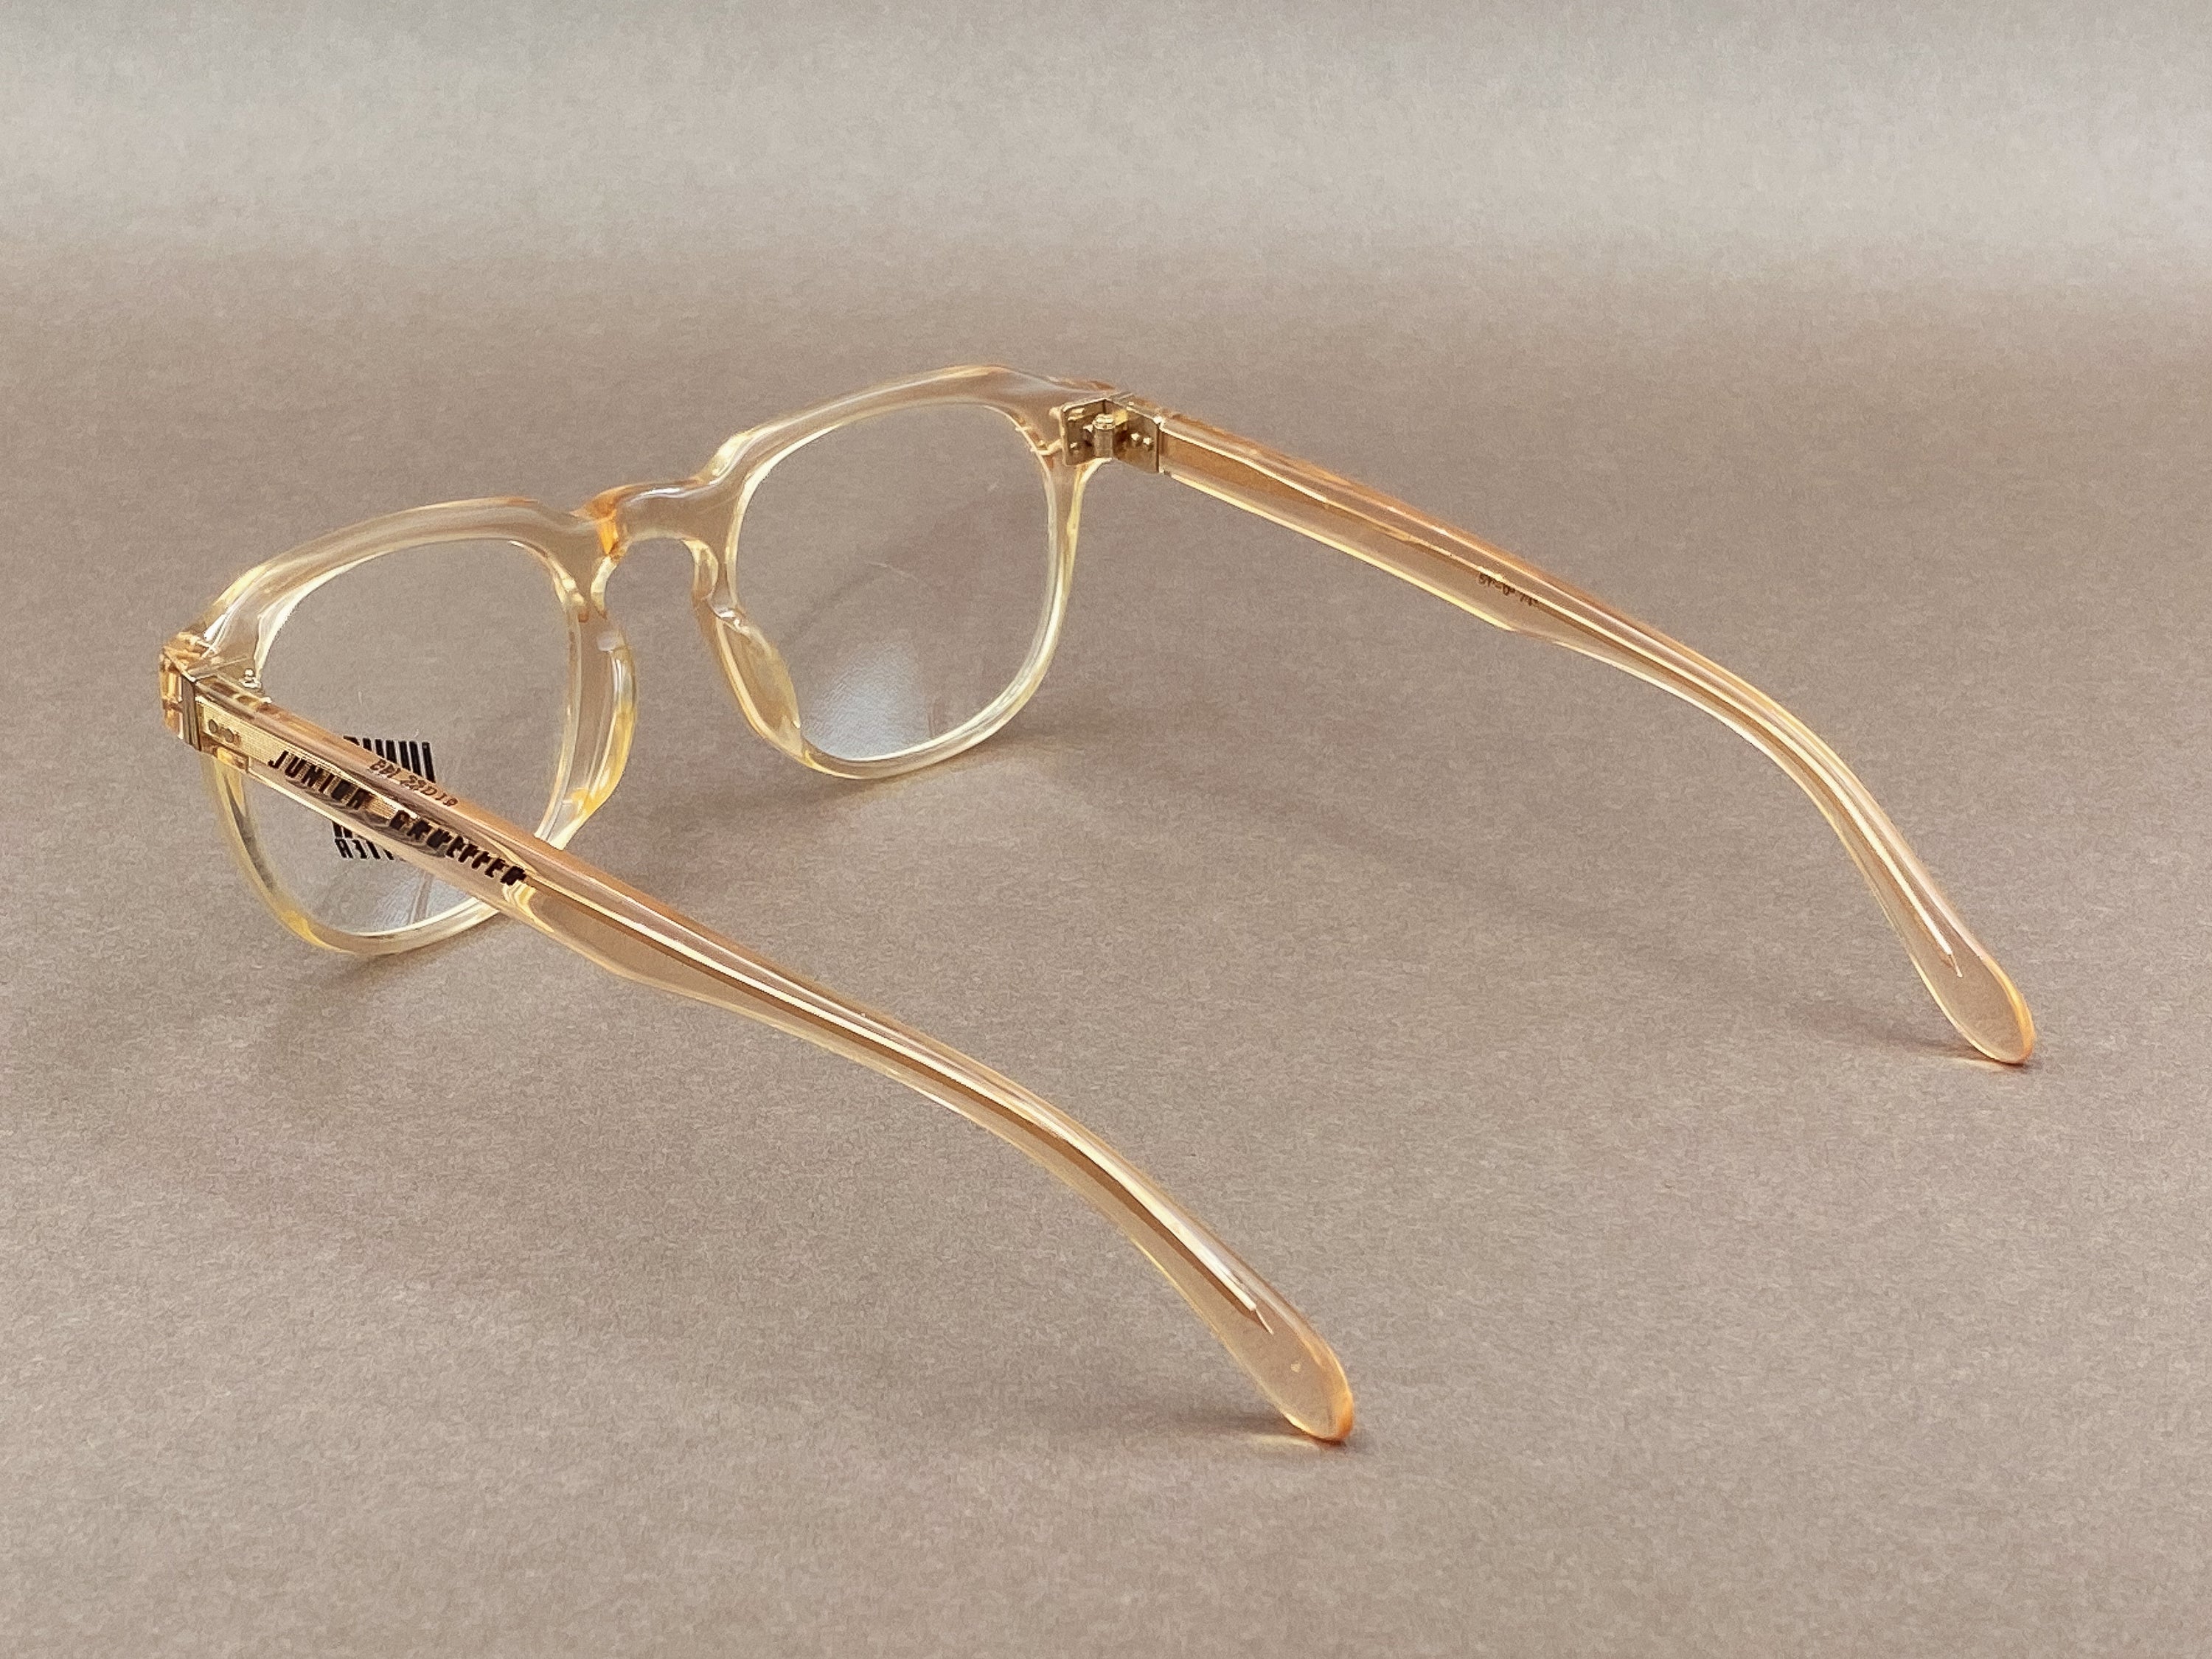 Junior Gaultier 57-071 glasses